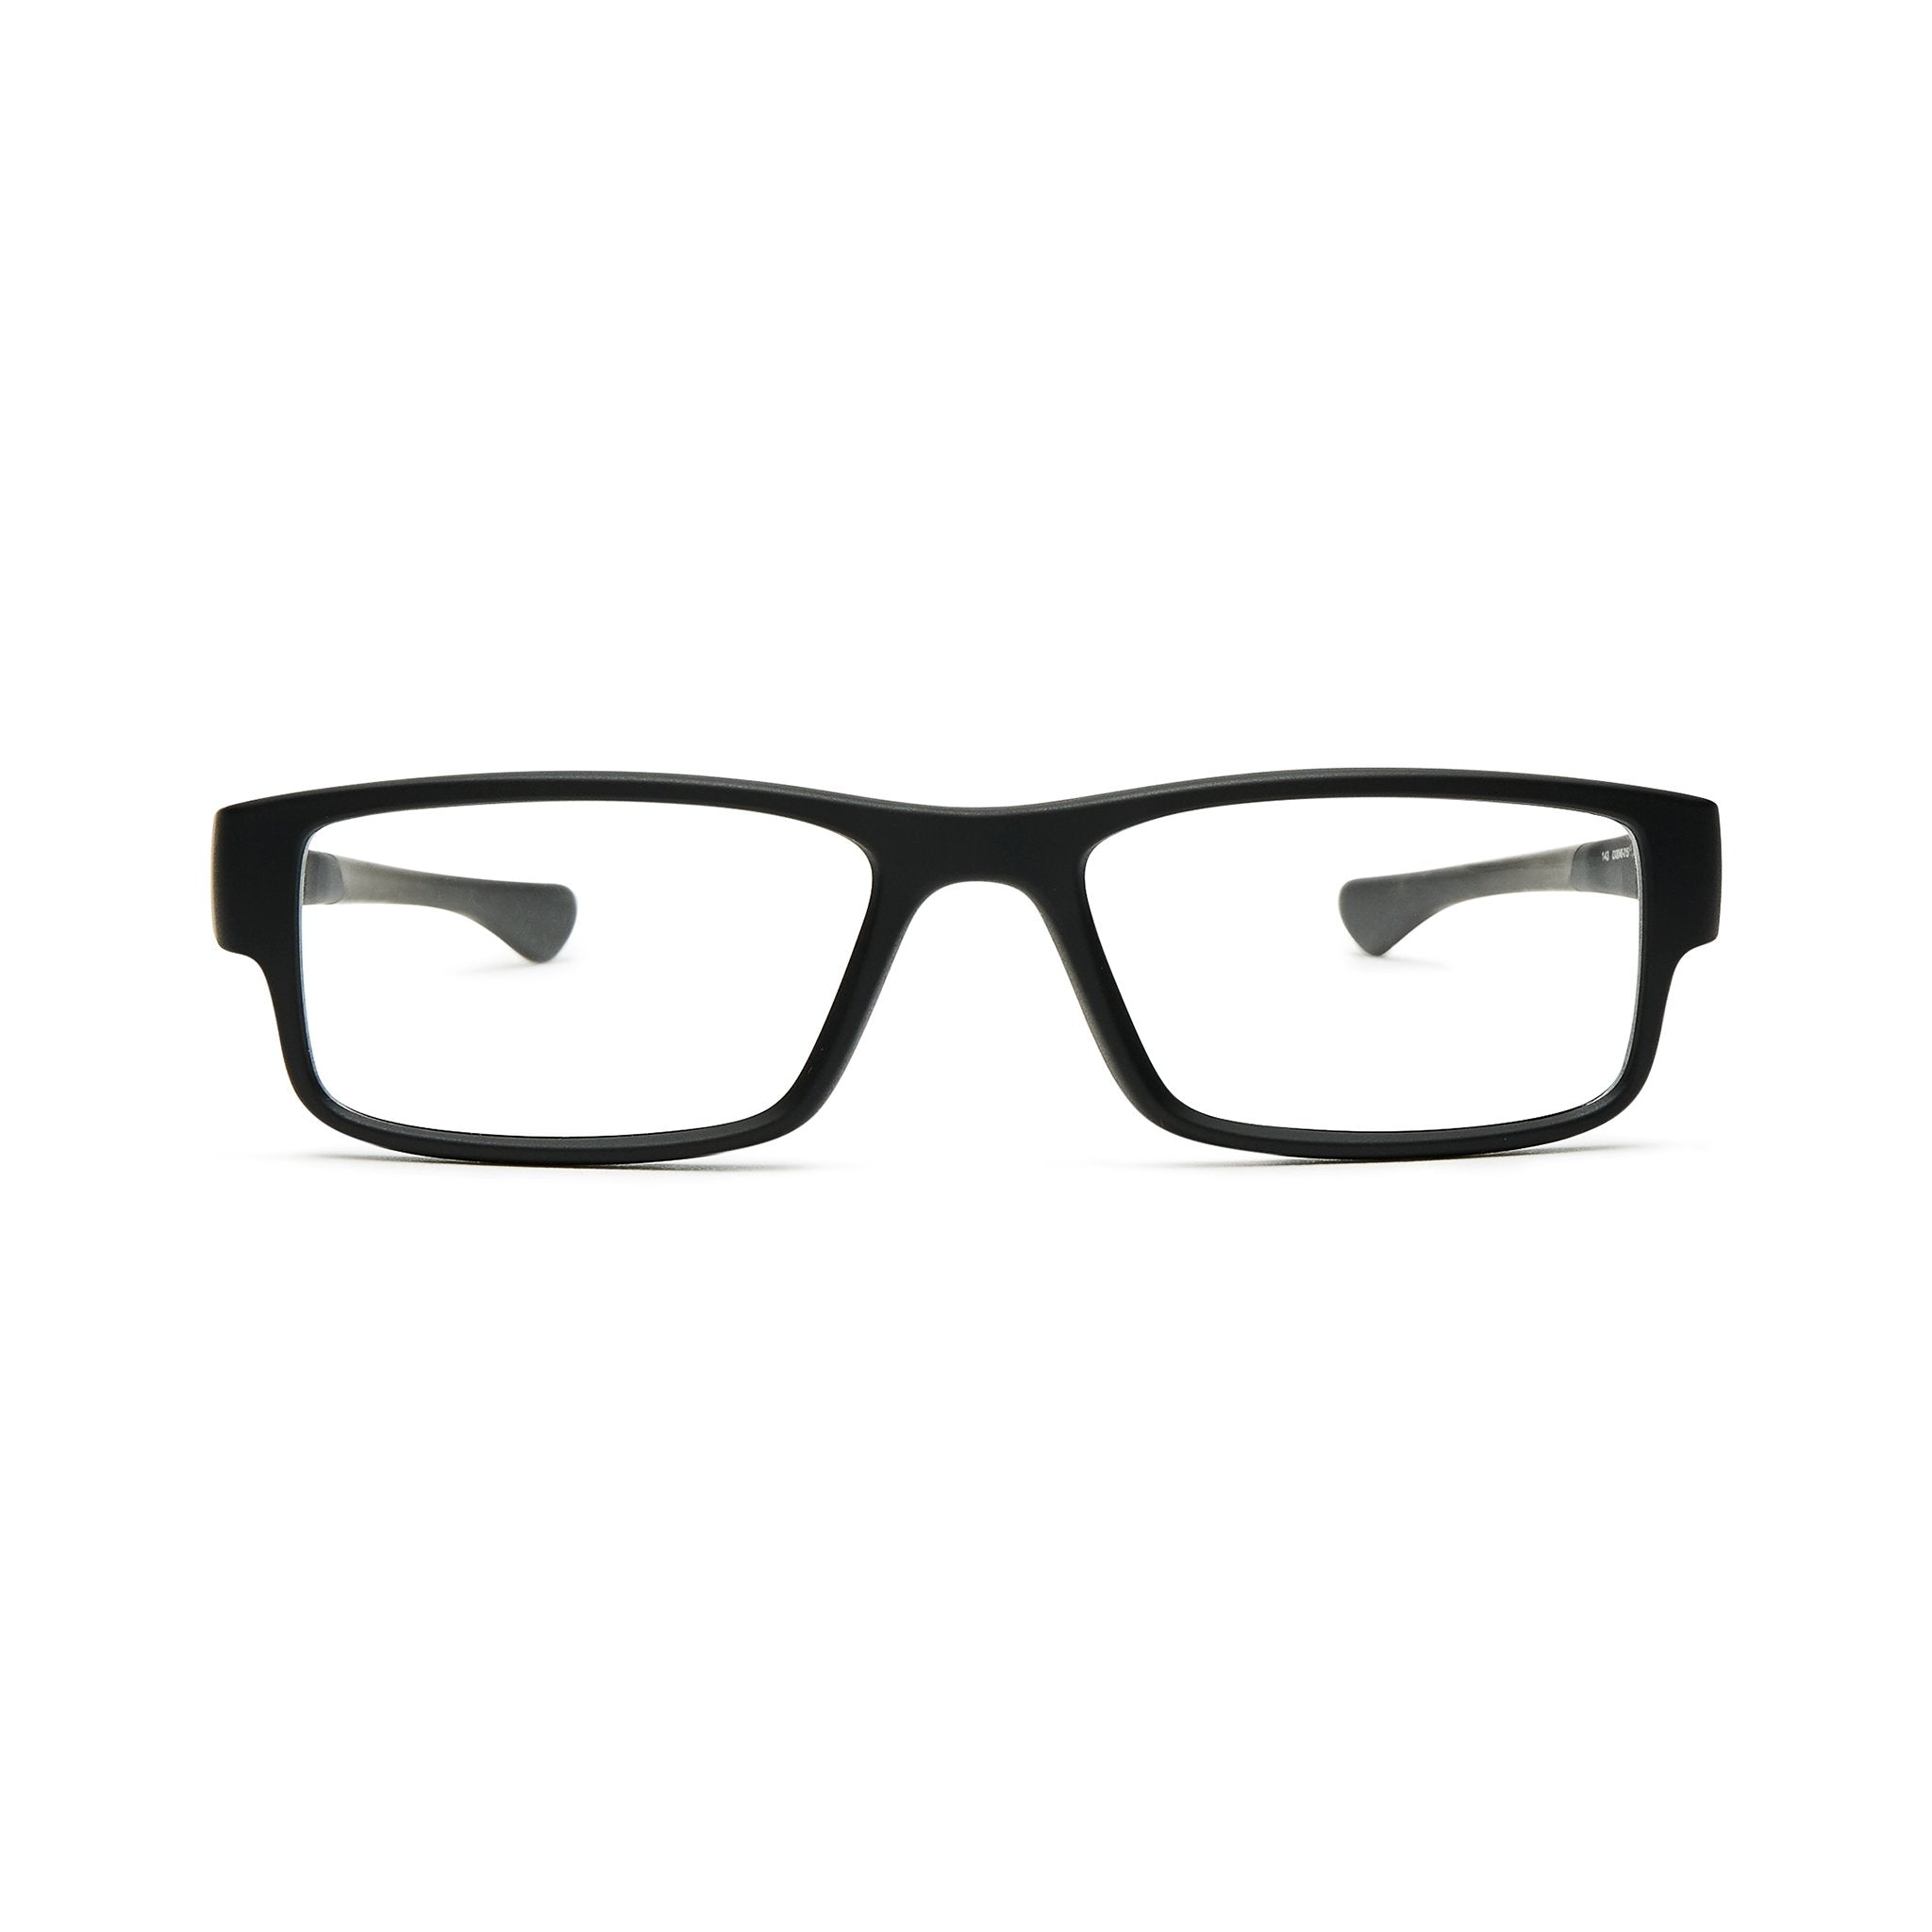 Oakley 8046 Mens Prescription Glasses | Bupa Optical